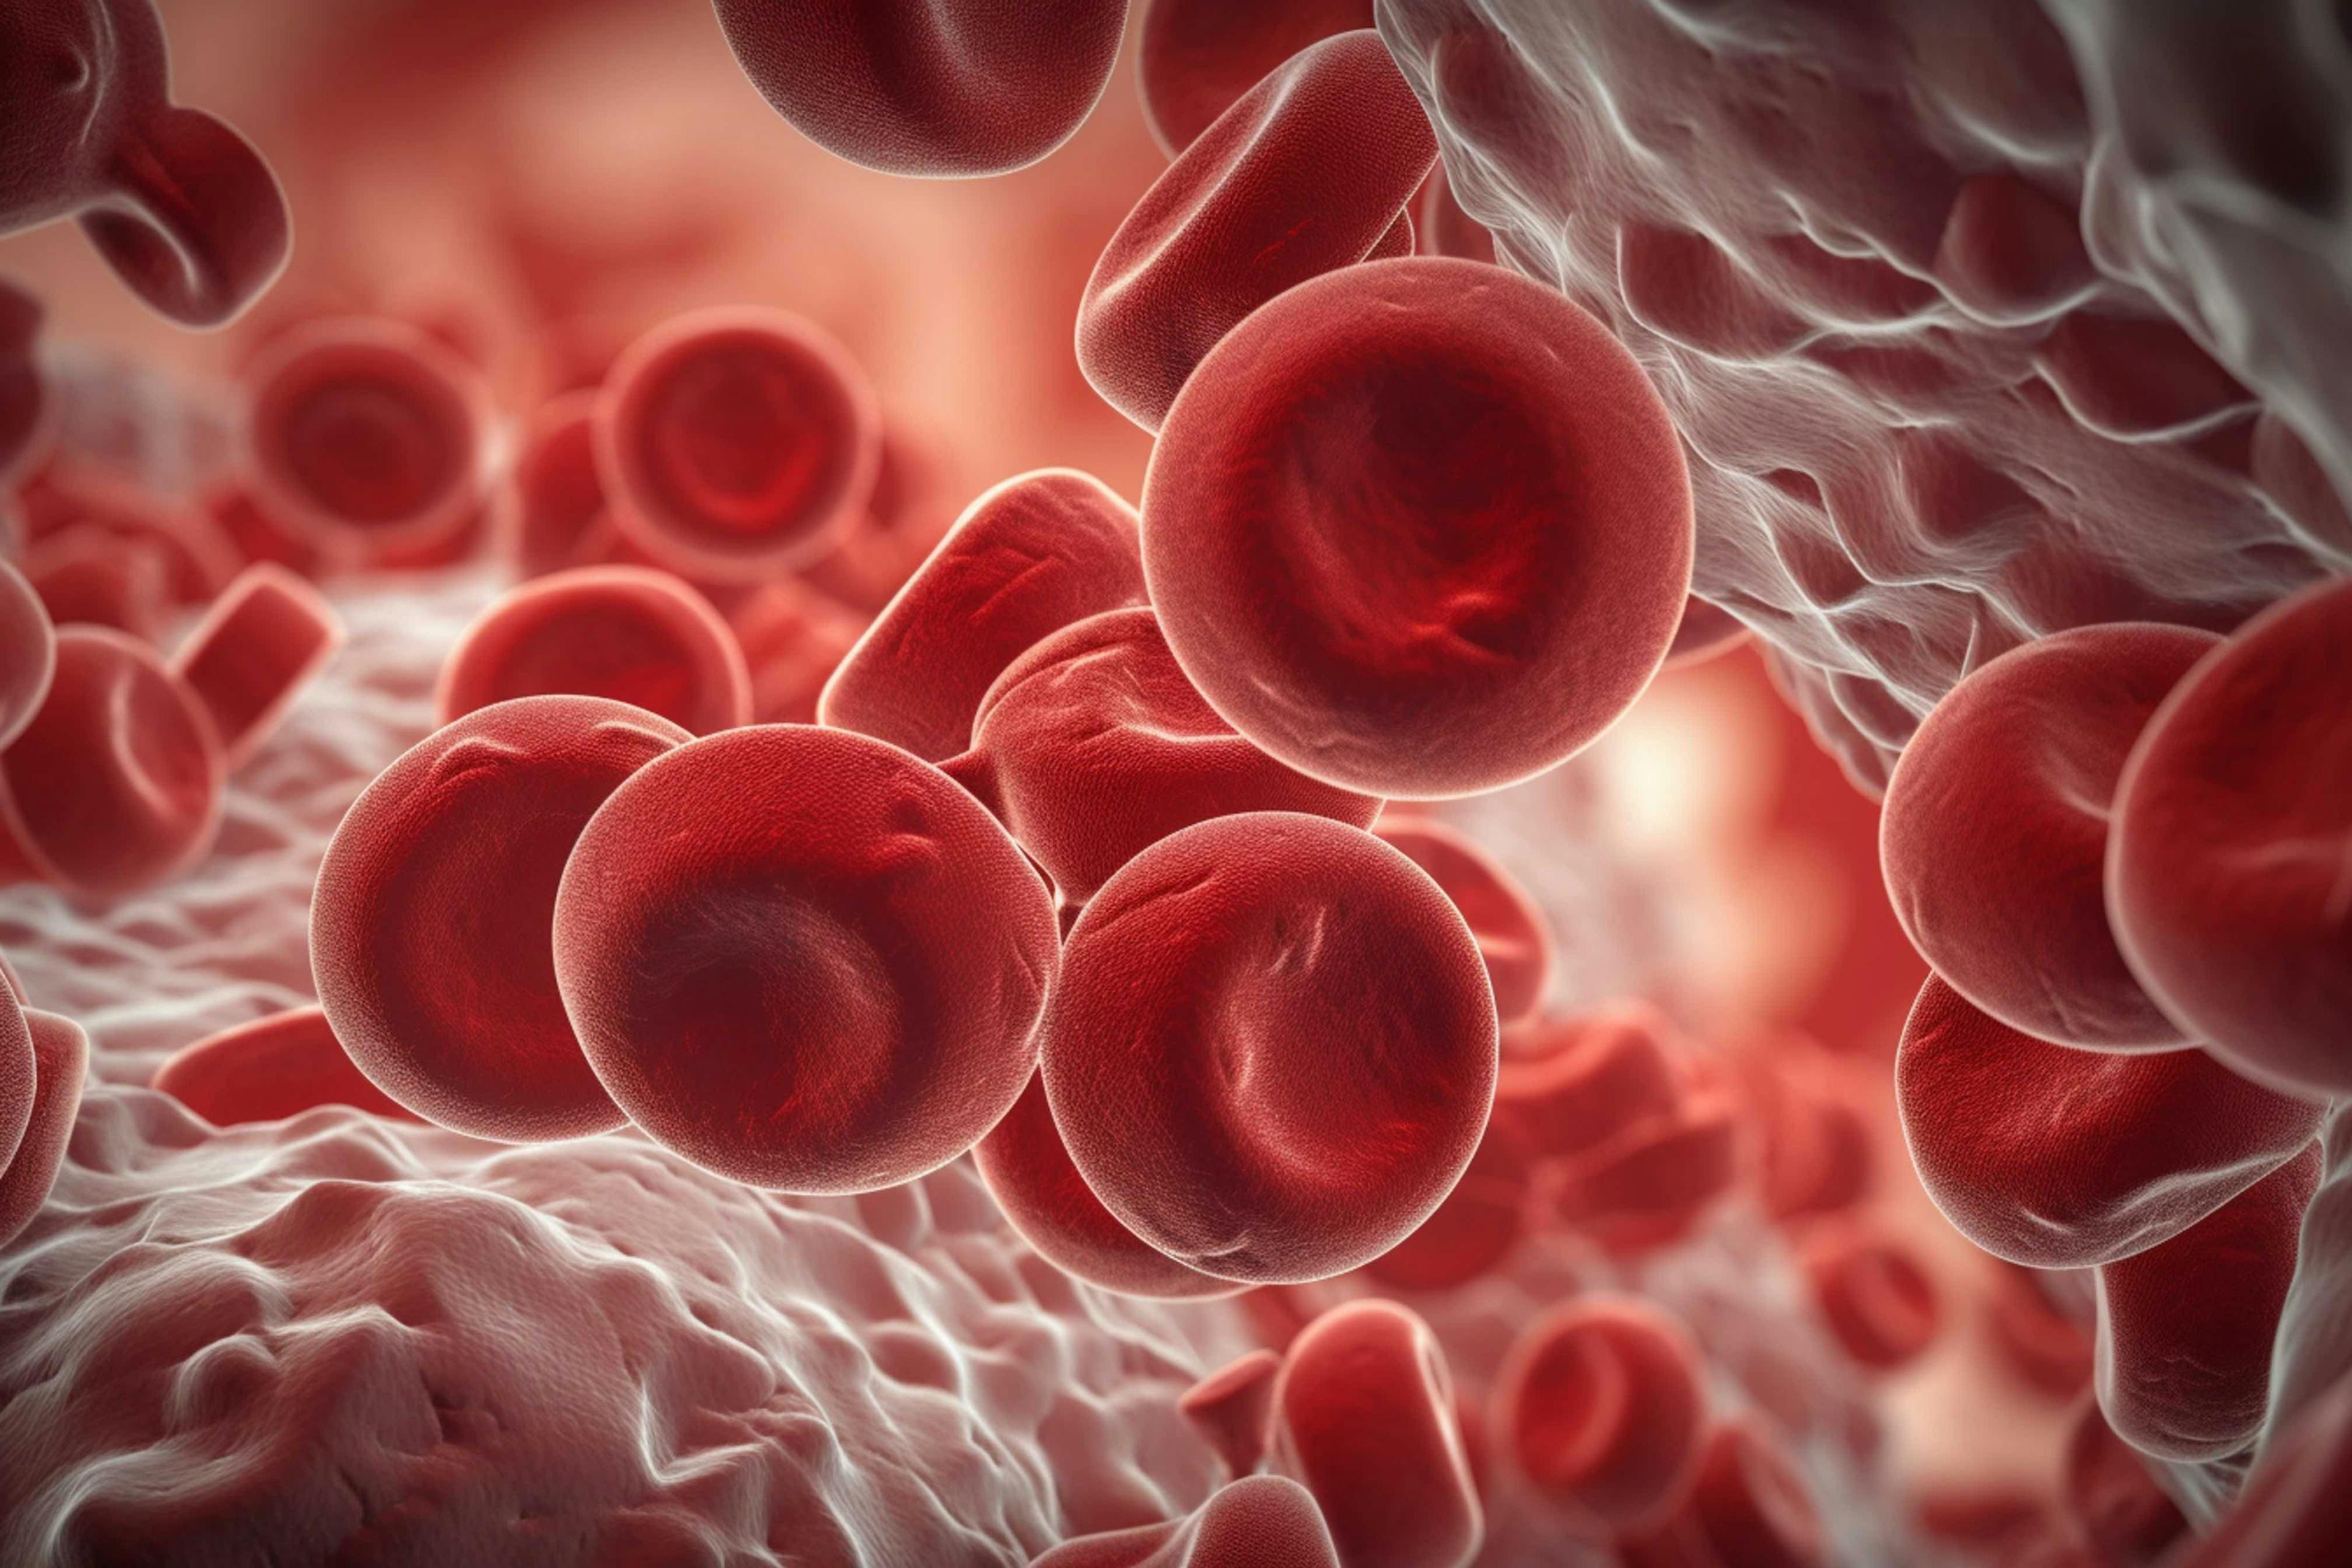 Blood cells illustration | Image credit: Катерина Євтехова - stock.adobe.com